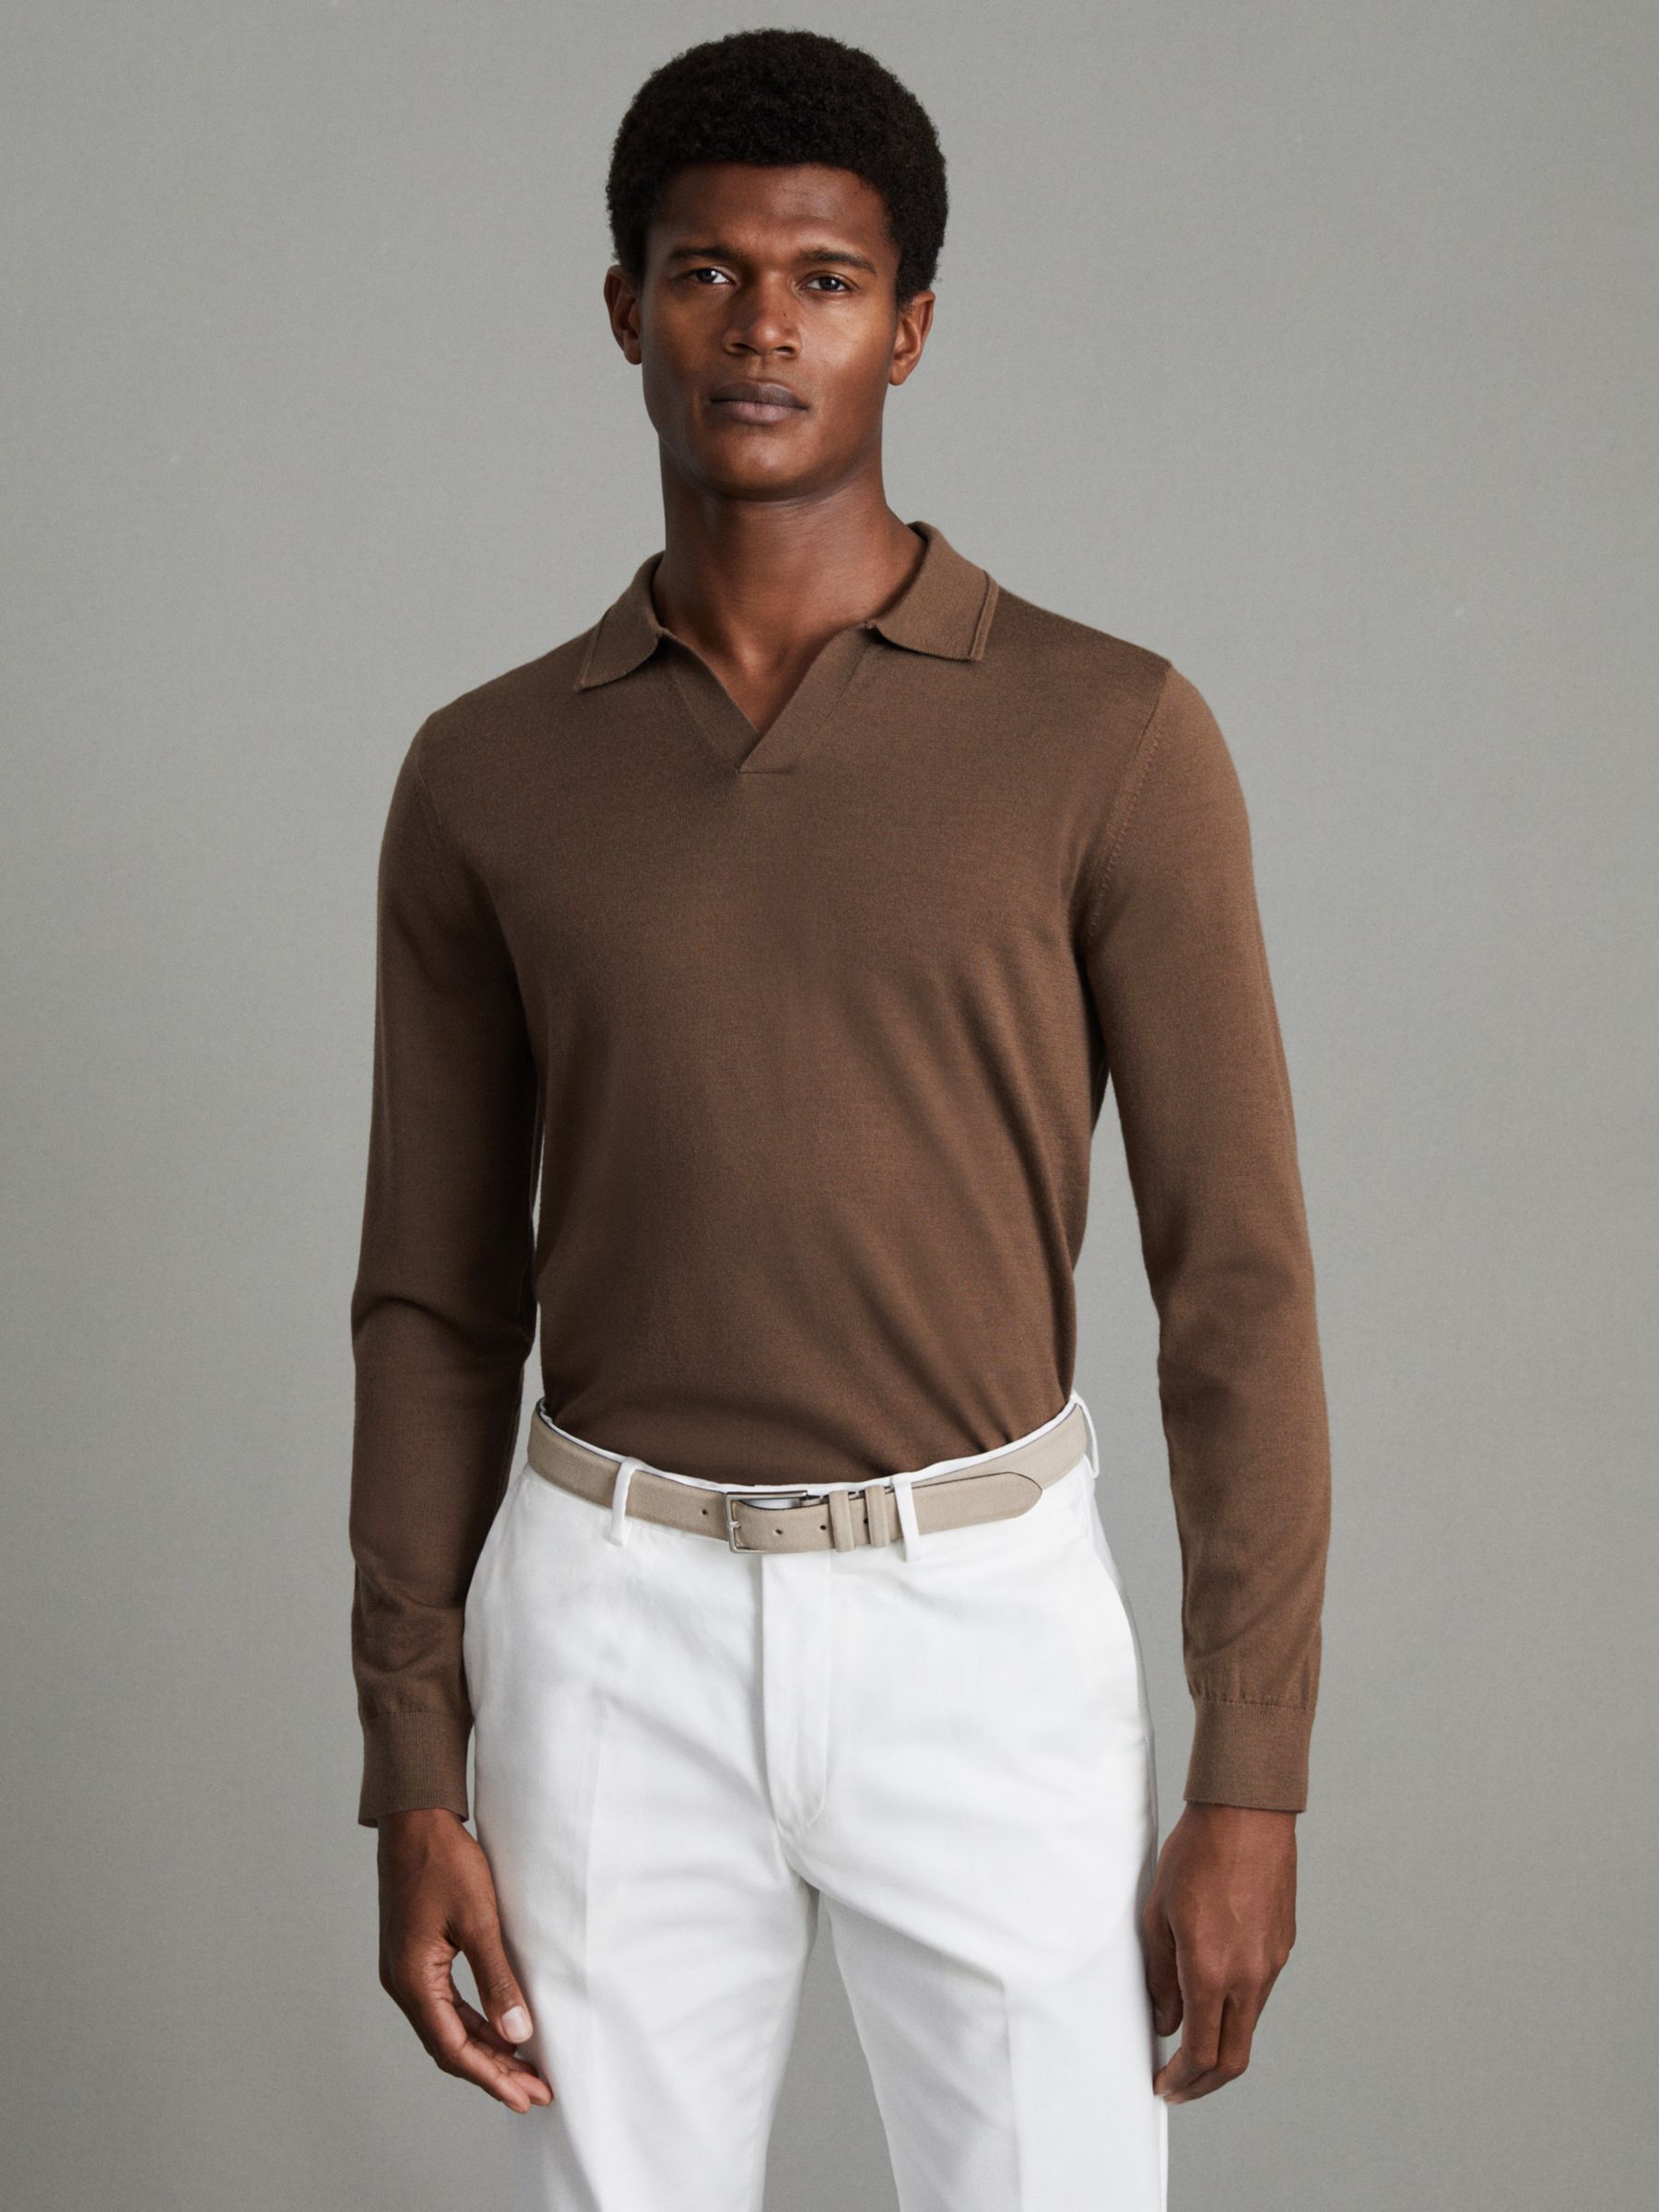 Reiss Milburn Merino Wool Polo Shirt, Pecan Brown, XL